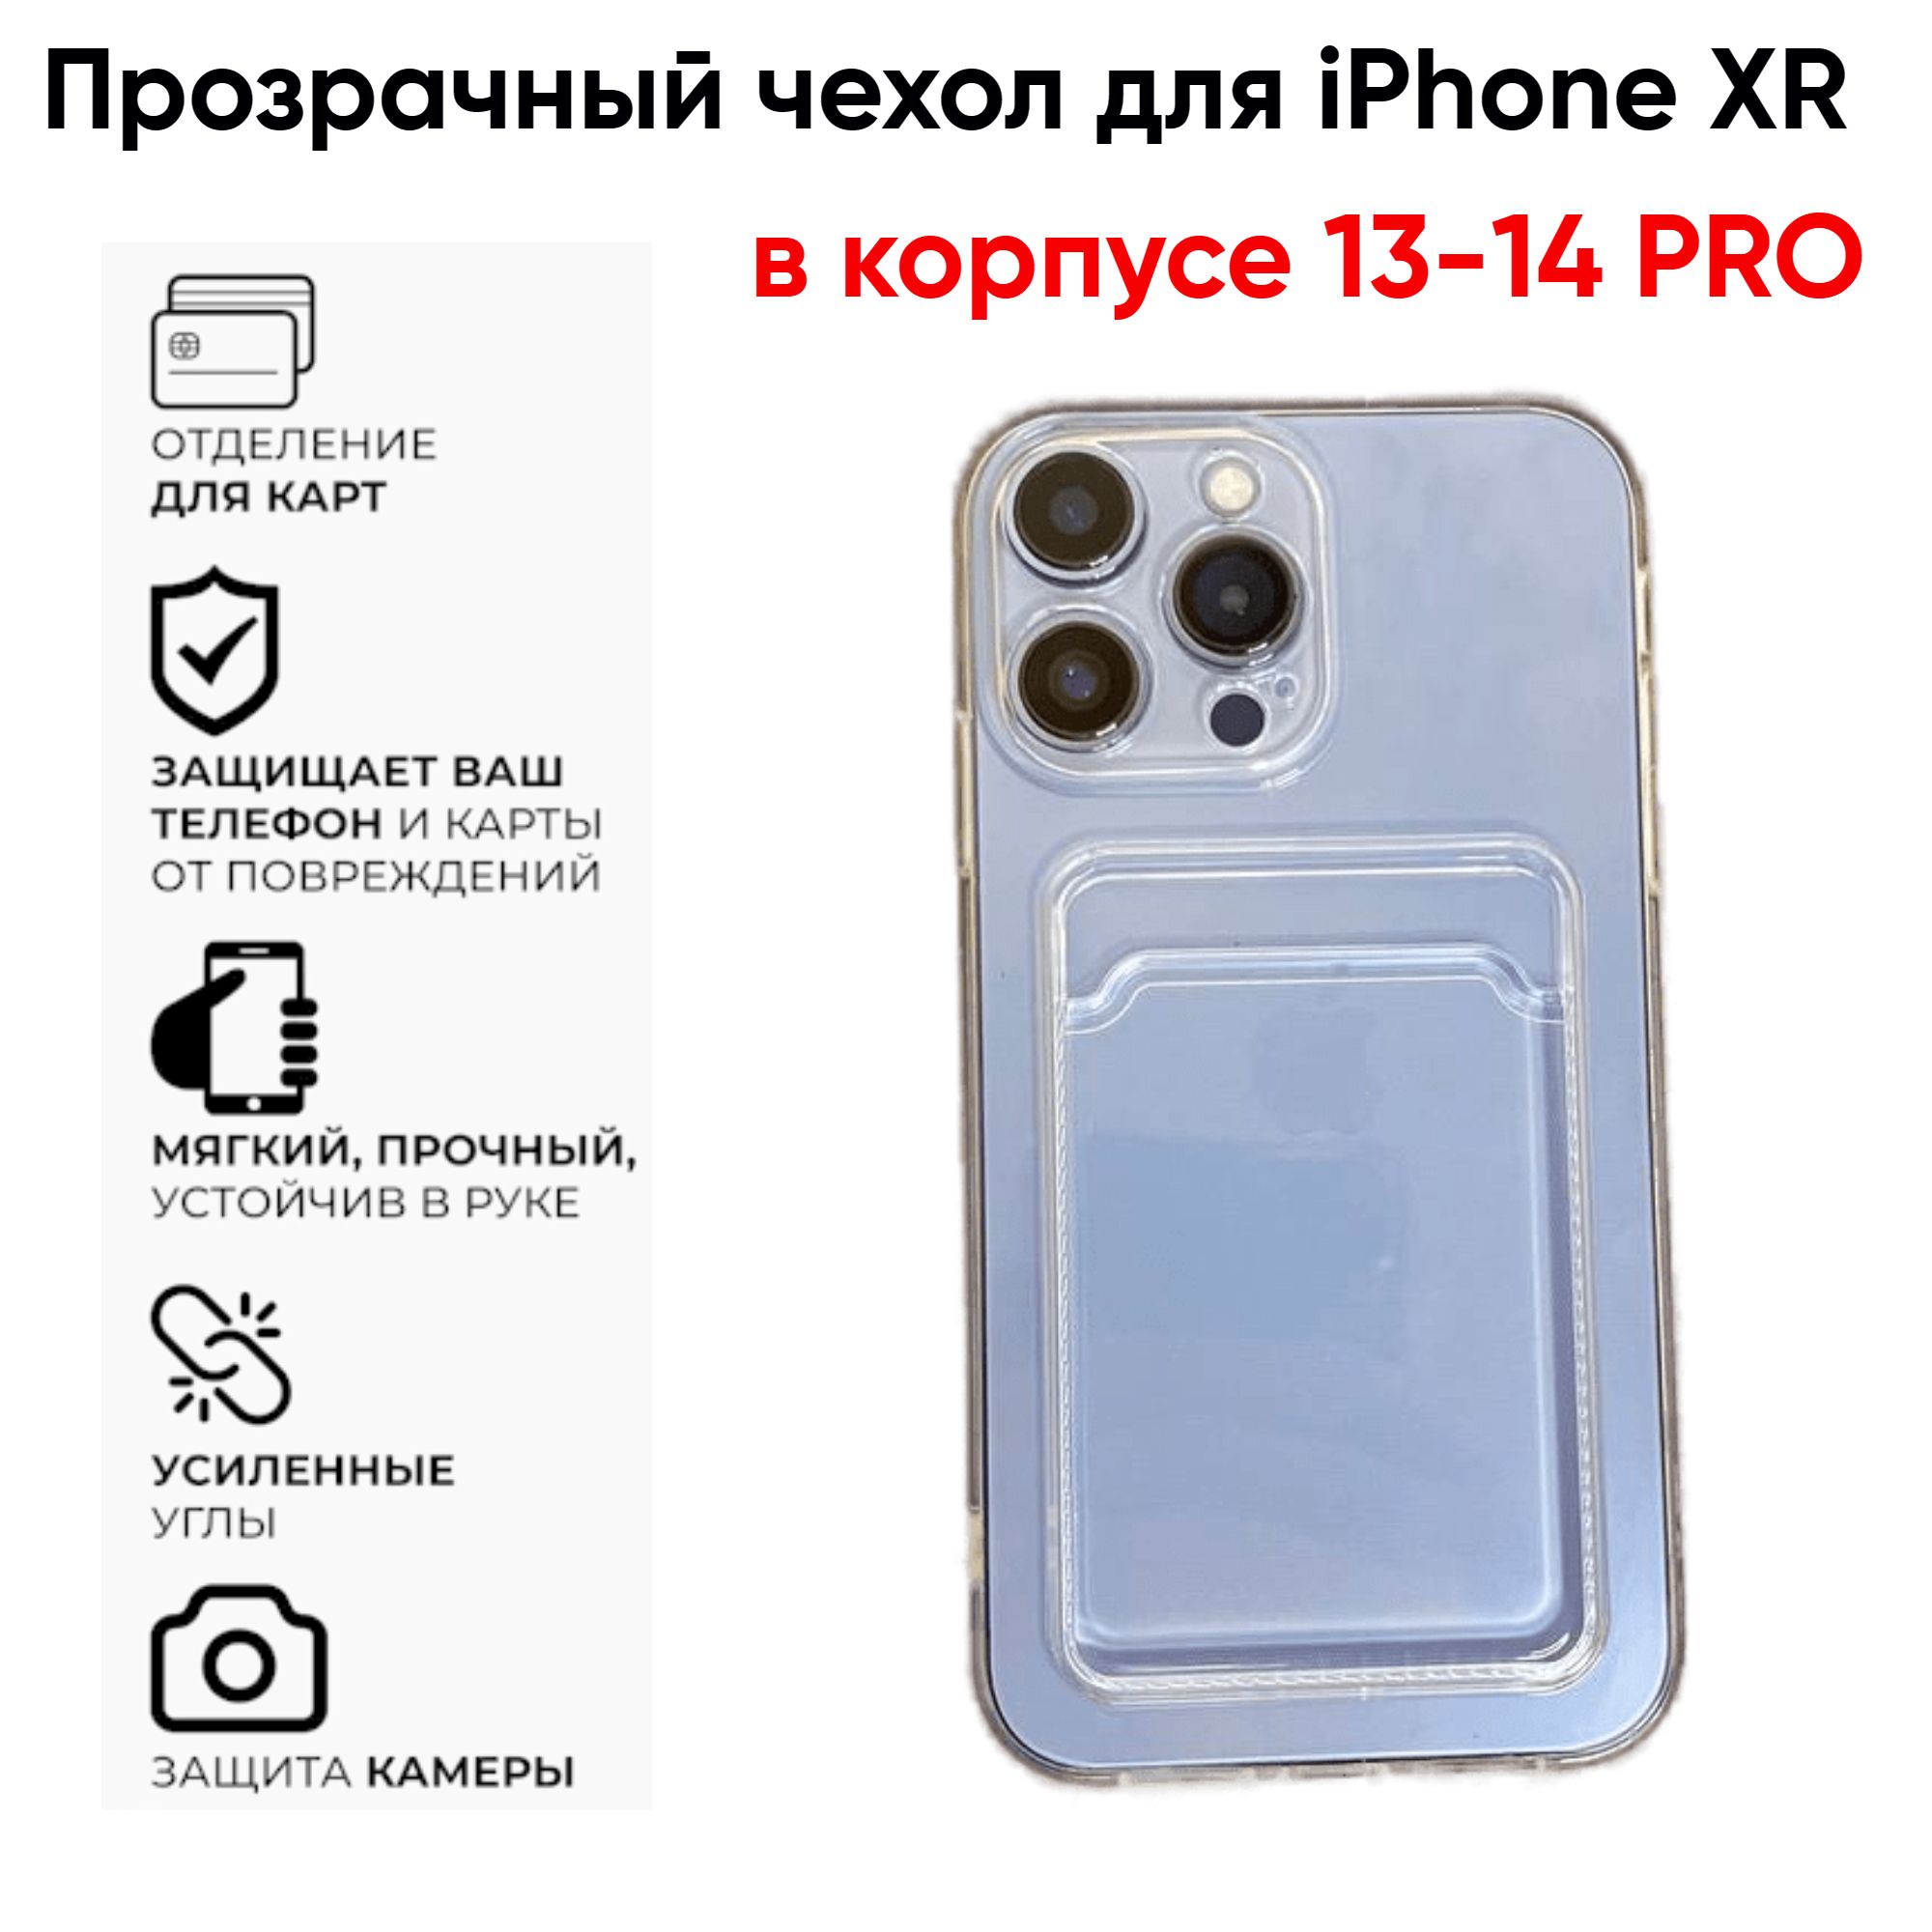 Купить xr в корпусе 13. Iphone XR В корпусе 14 Pro цвета. XR В корпусе 14 Pro Max. Iphone XR В корпусе 13 Pro. Iphone XR В корпусе 14 Pro Max.